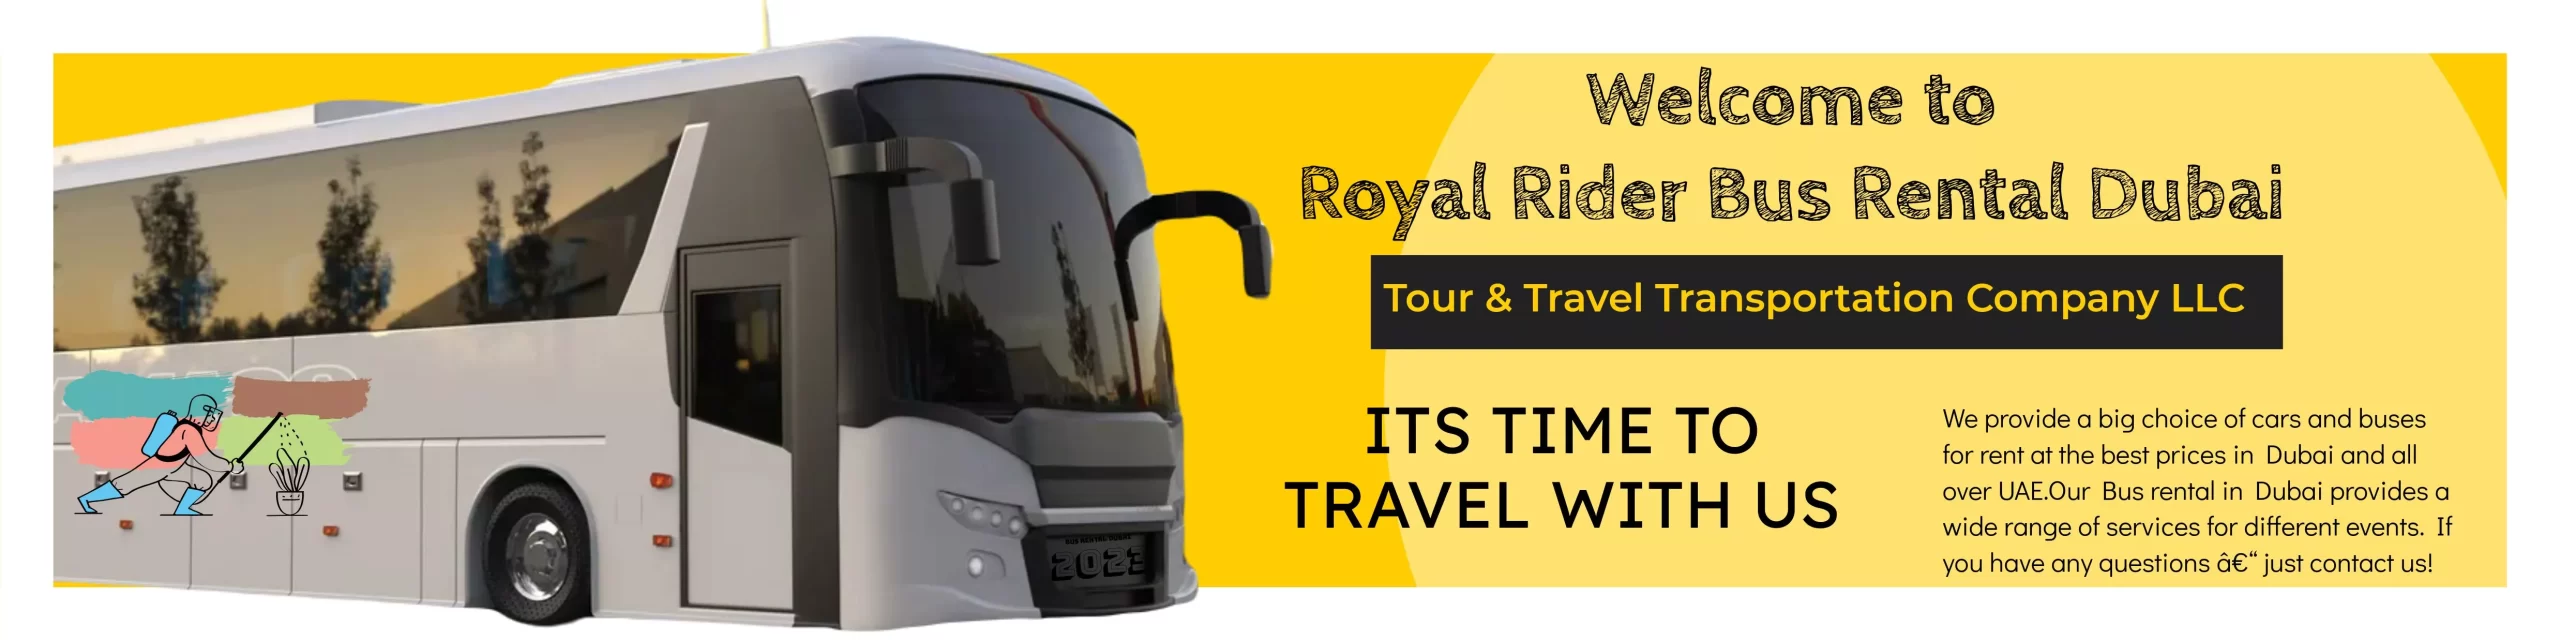 royal-rider-bus-rental-Dubai-welcome